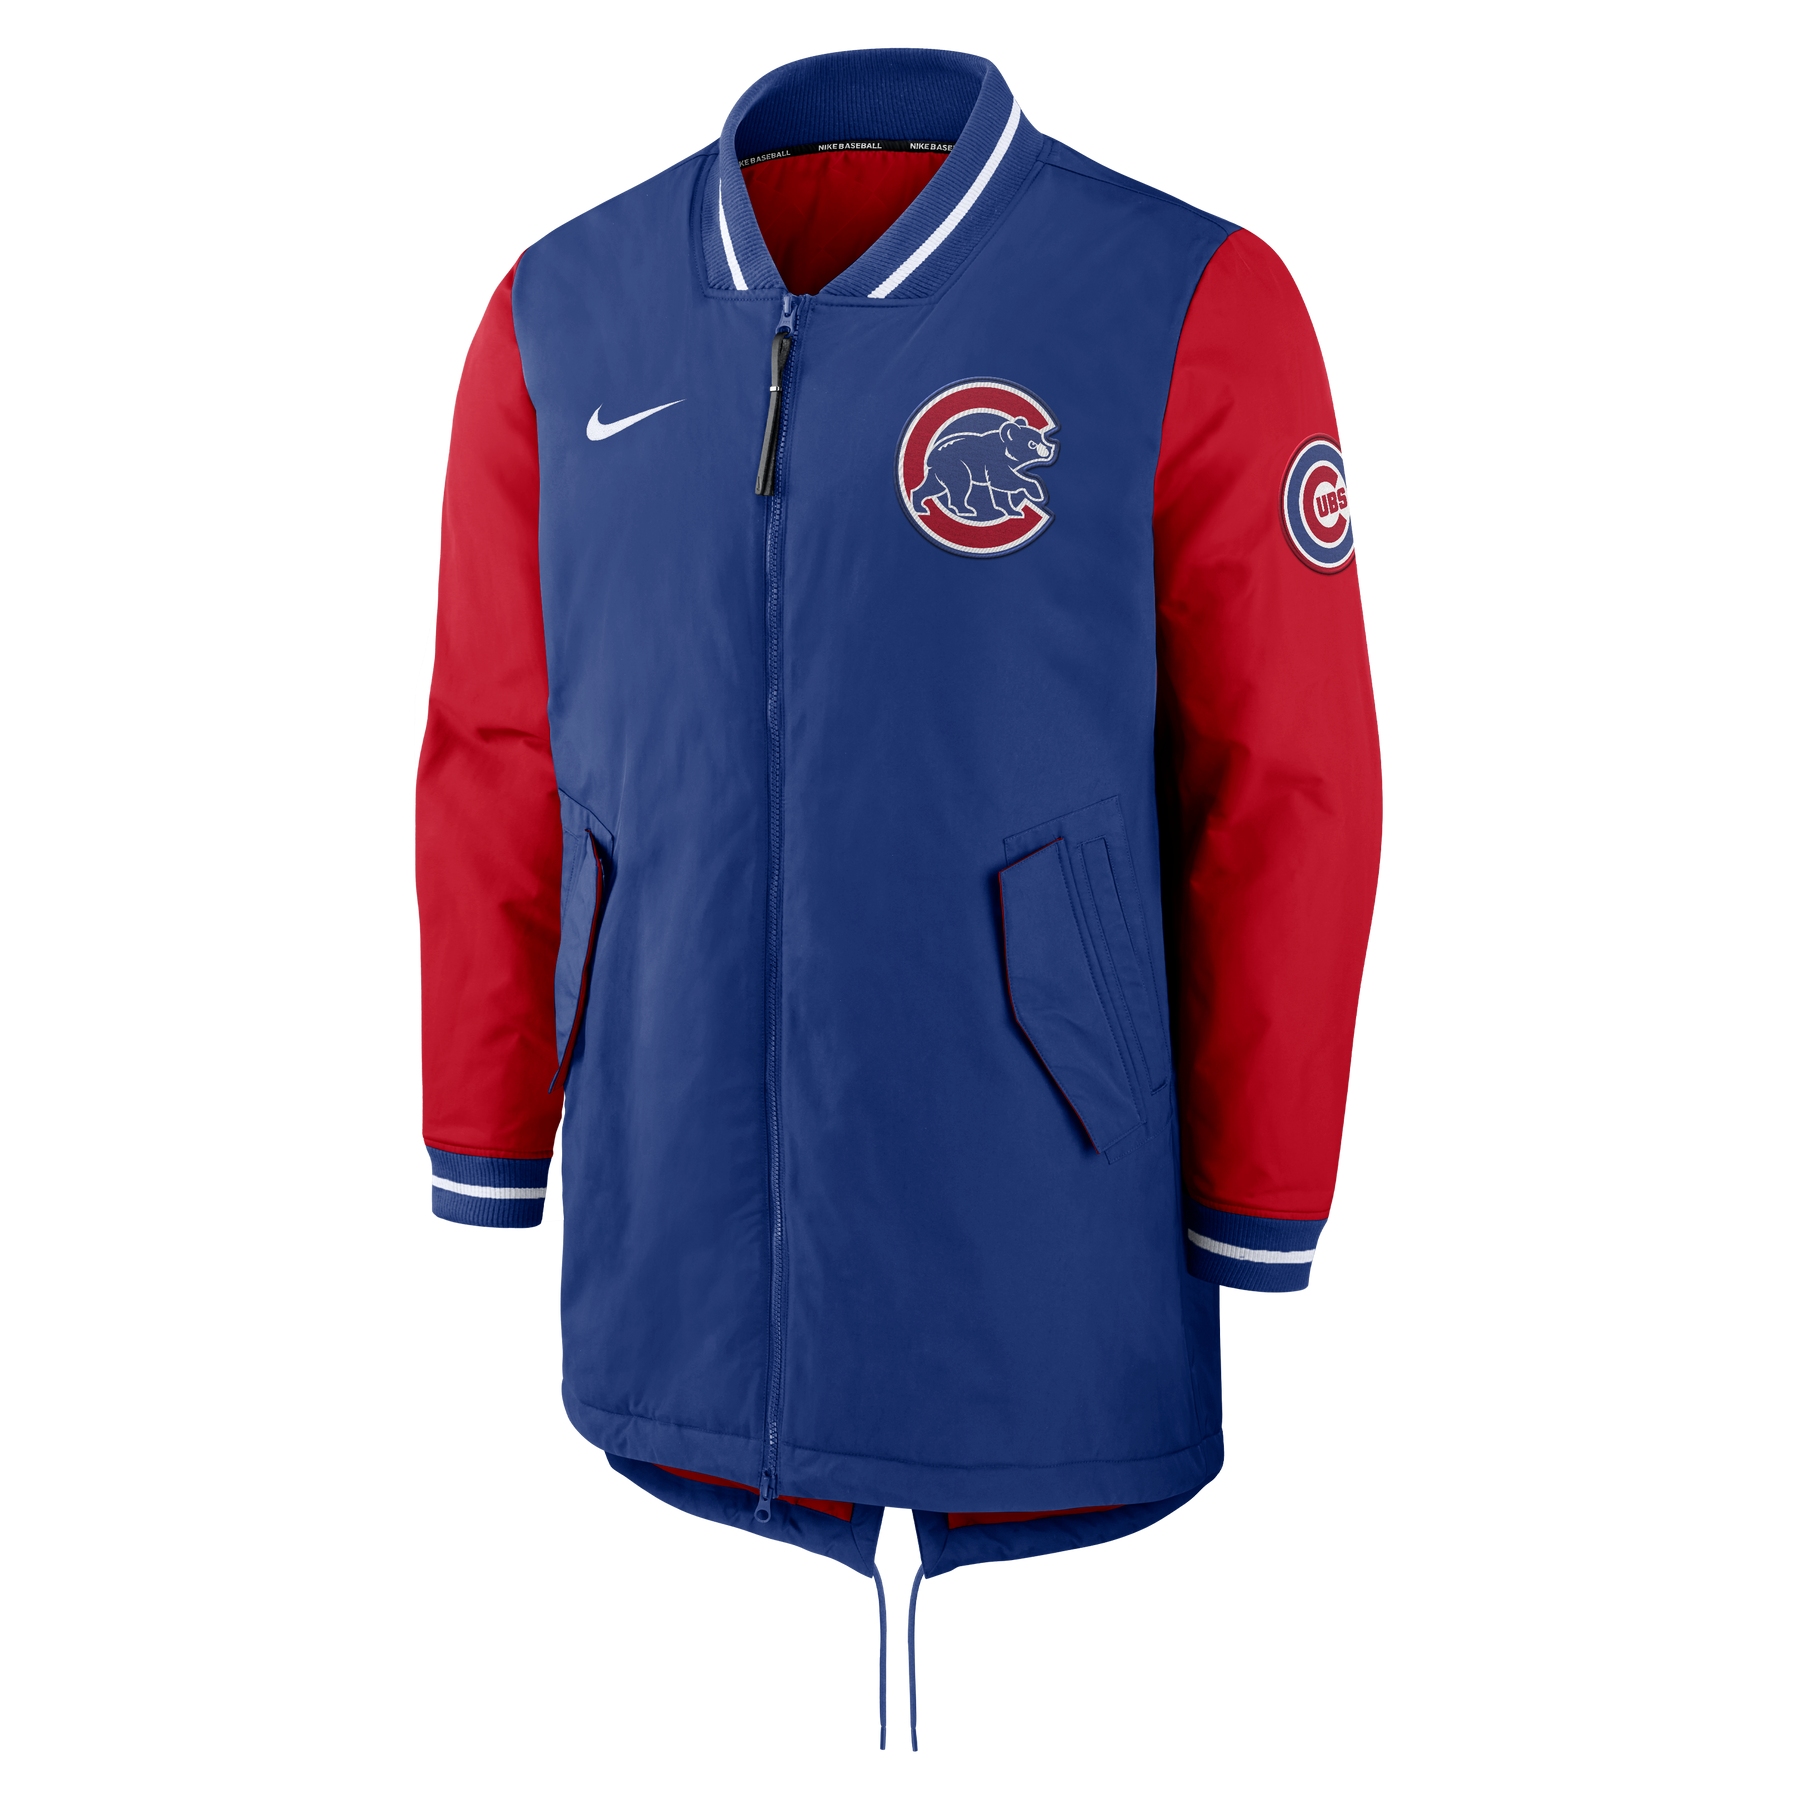 Nike Player (MLB Chicago Cubs) Men's Full-Zip Jacket.